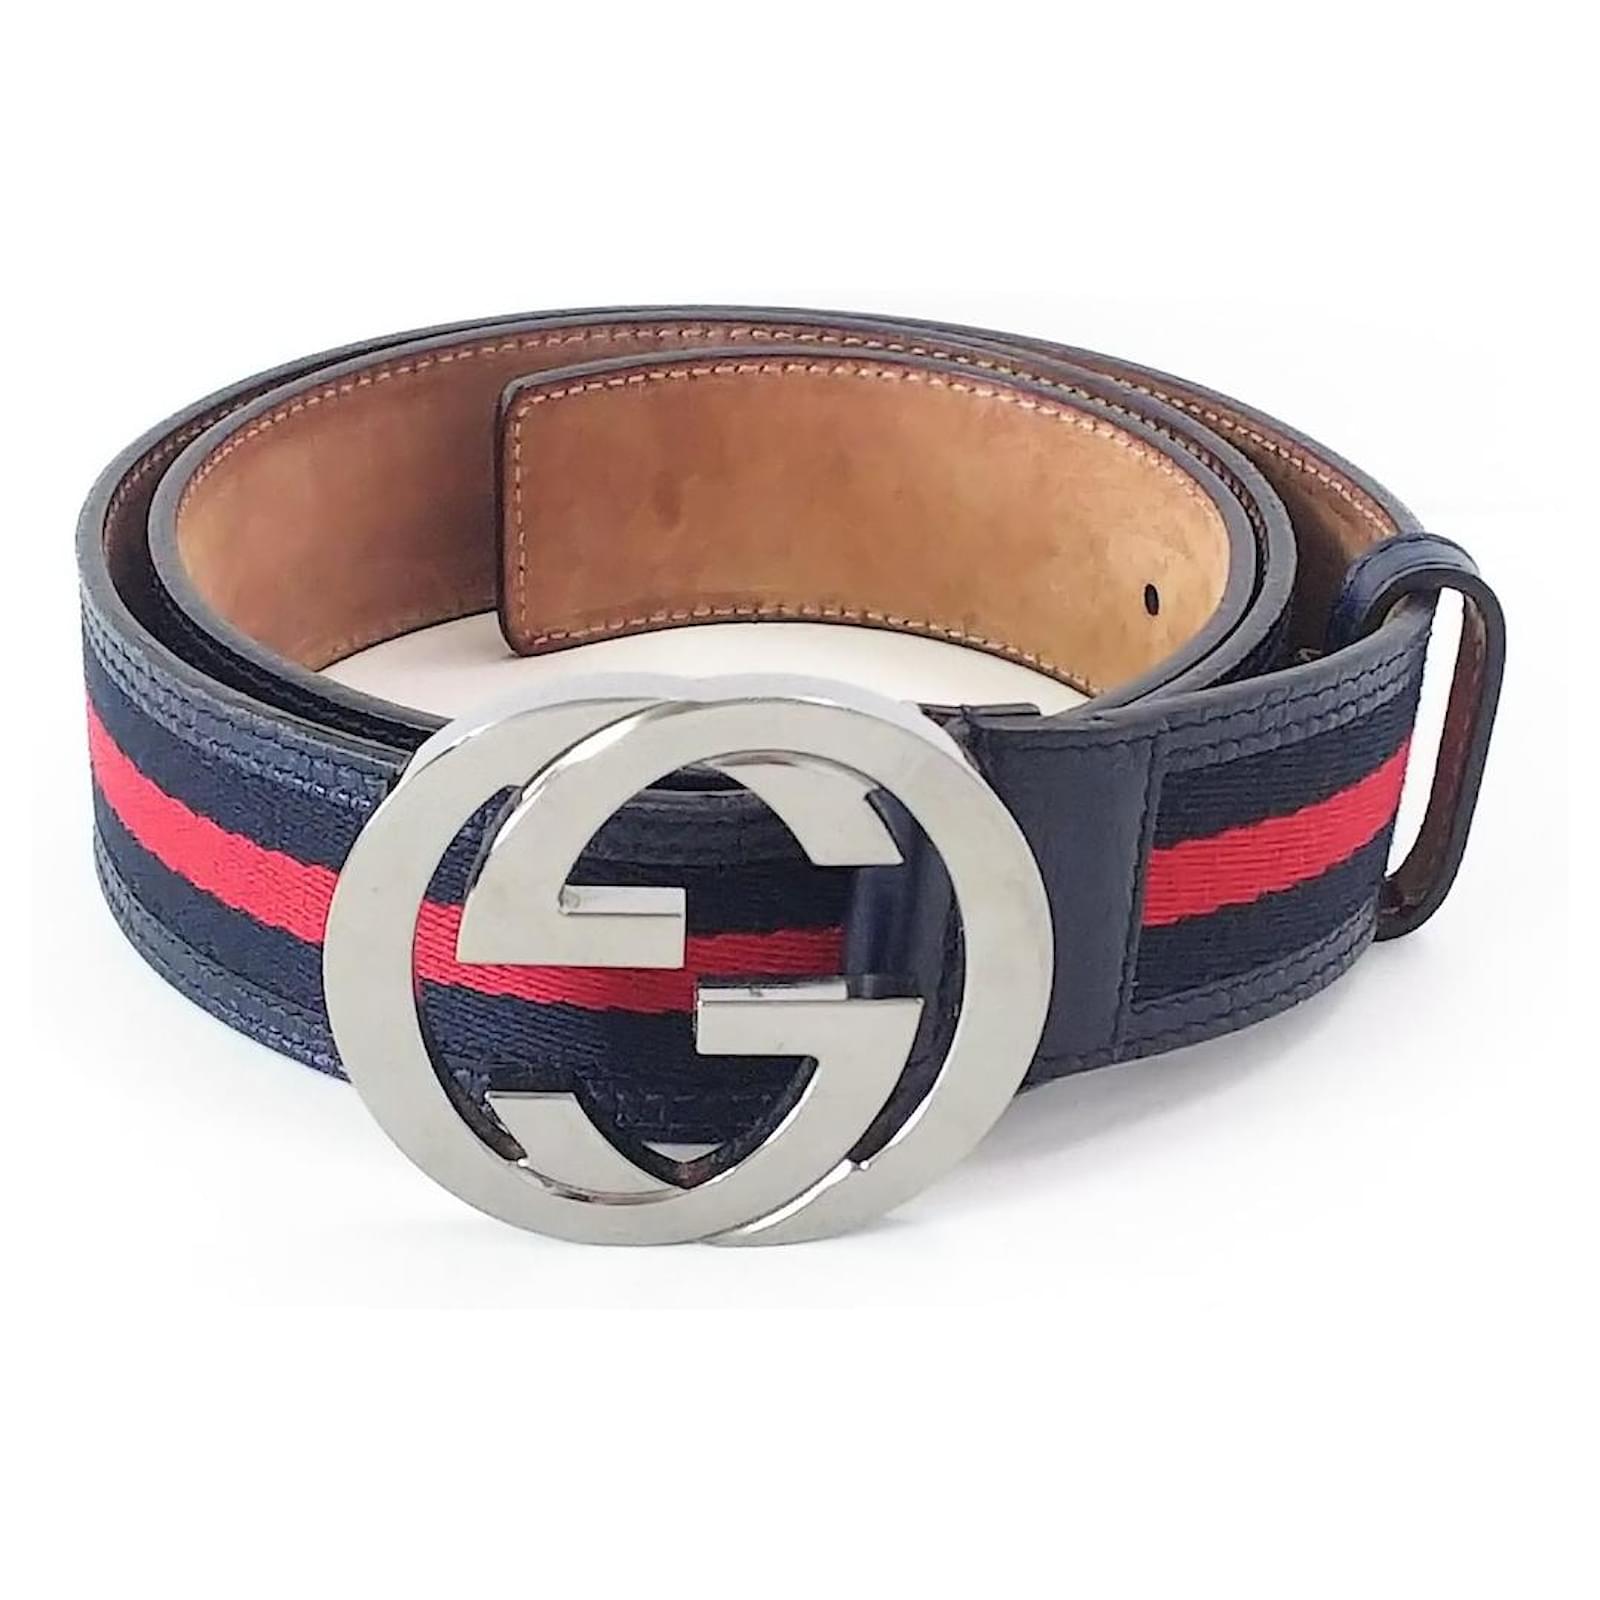 Mens Gucci Belt Size 38/95  Mens gucci belt, Gucci belt sizes